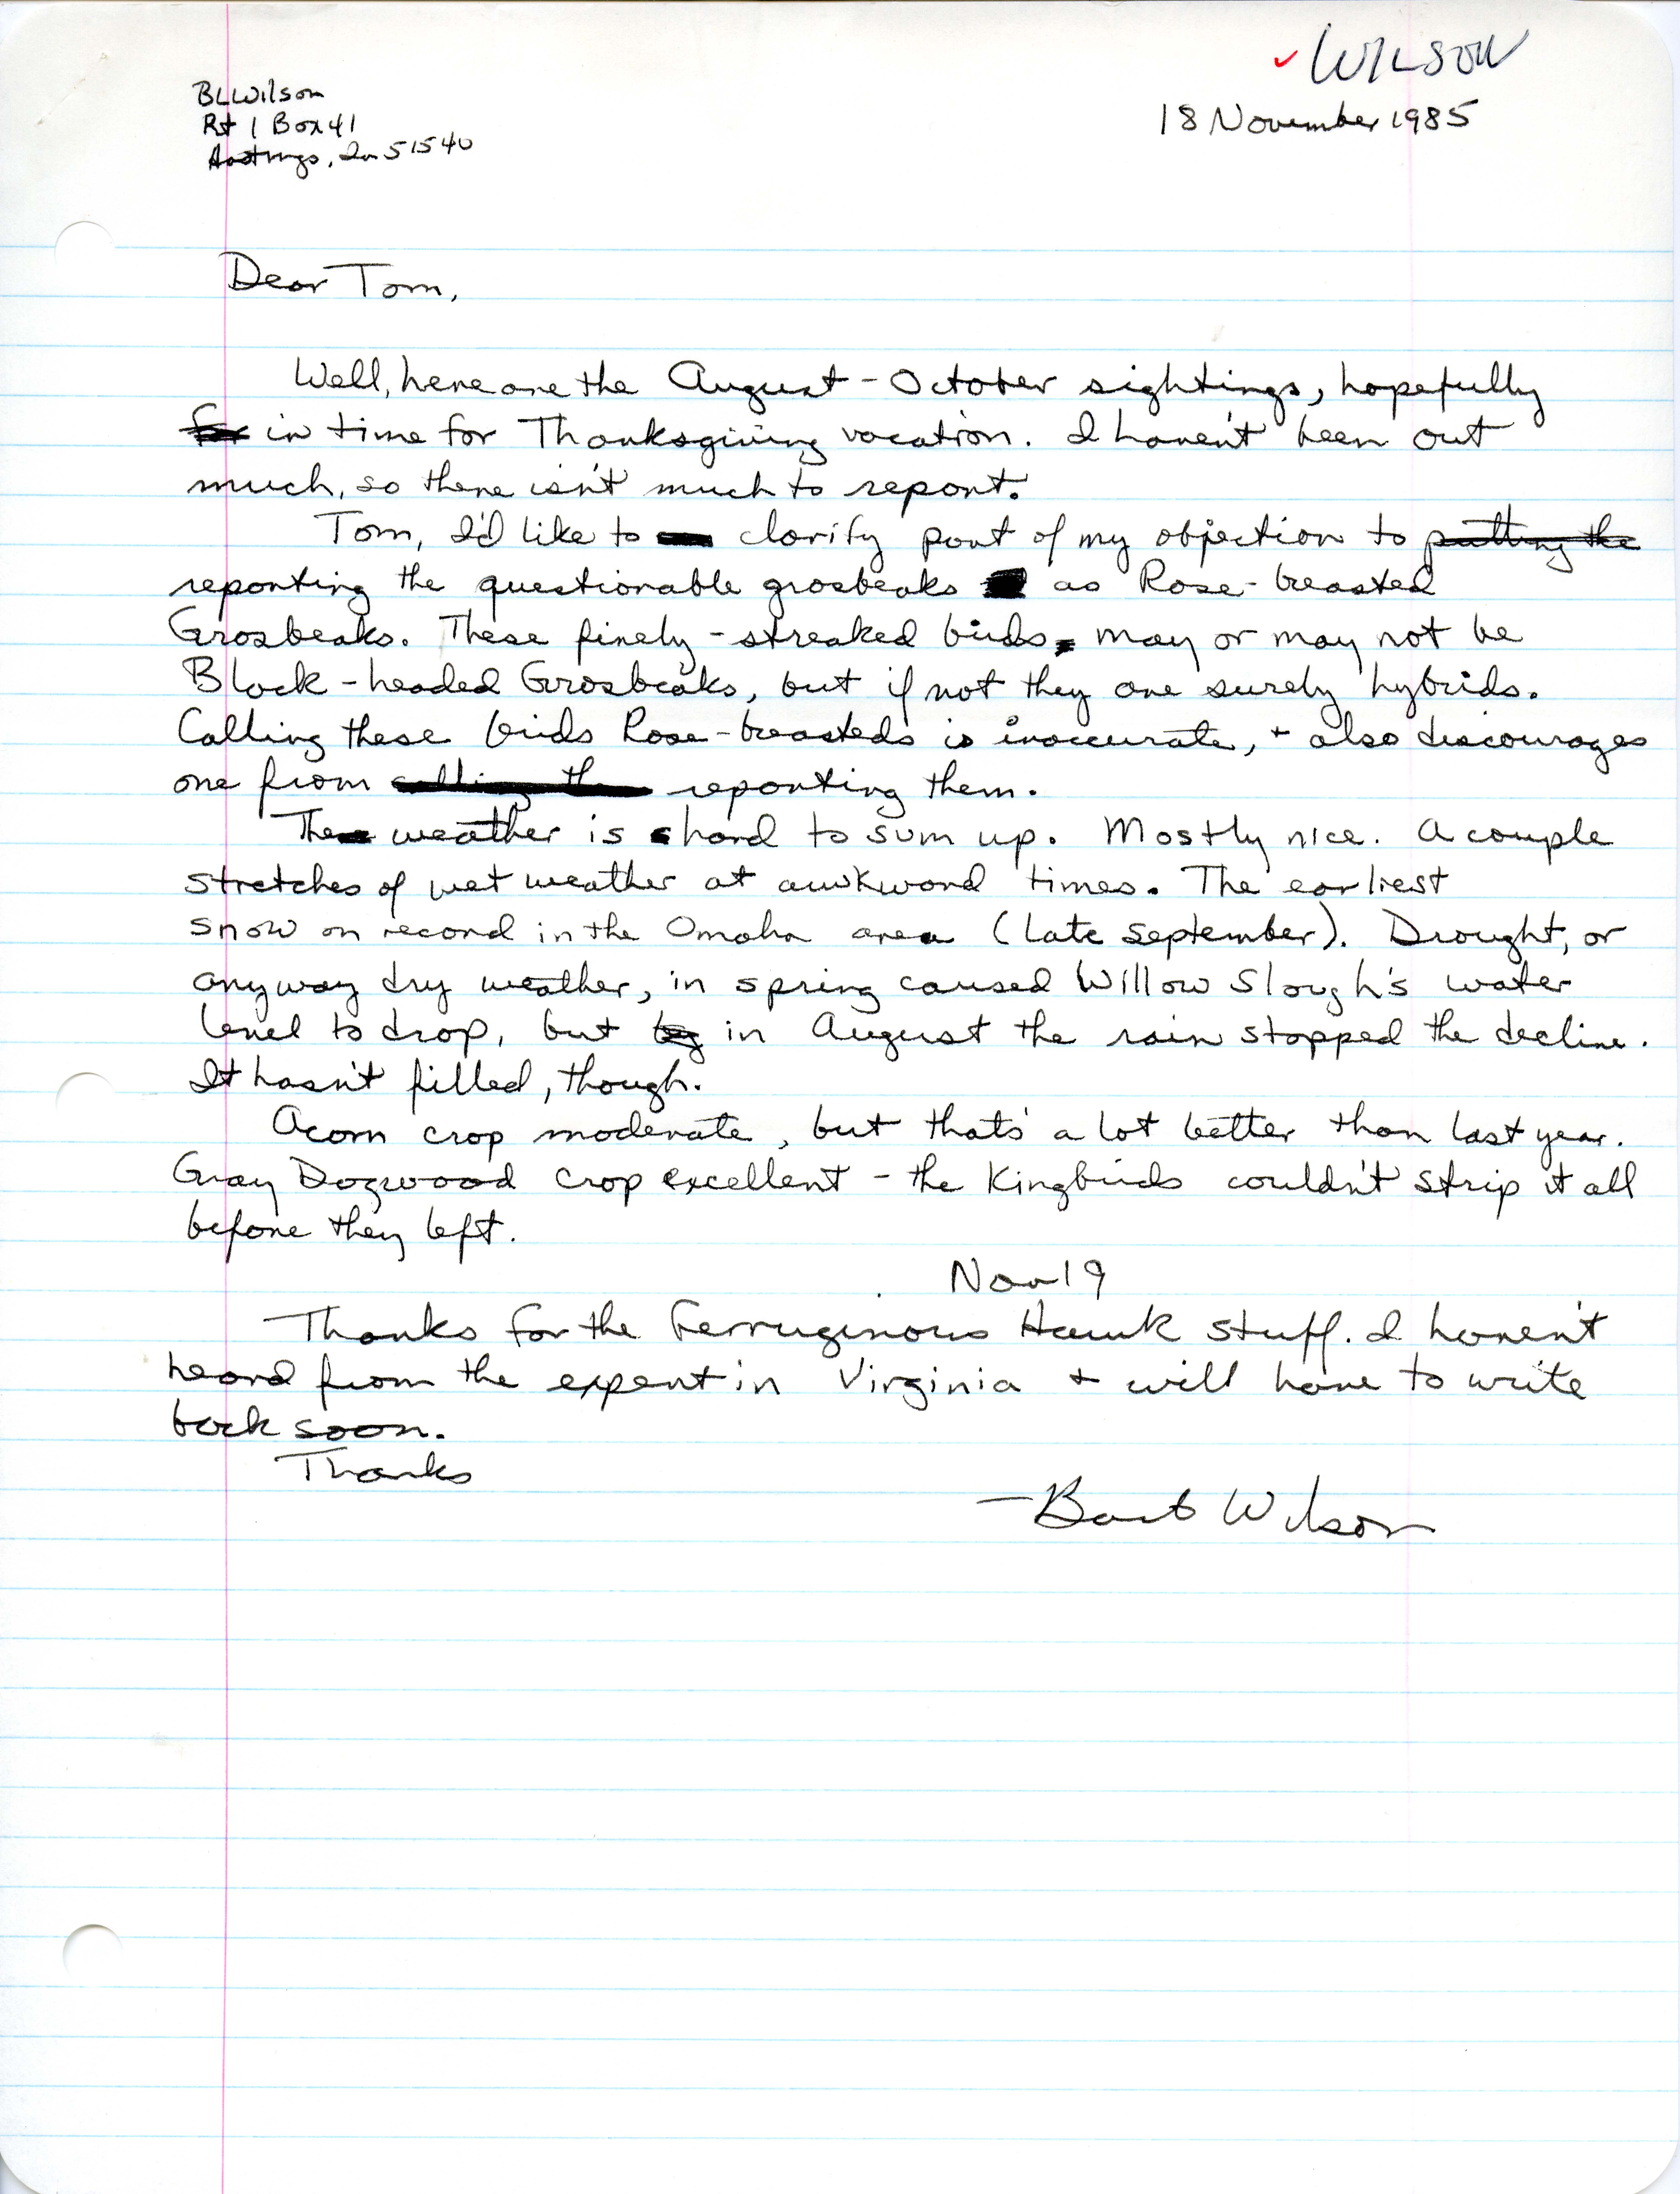 Barb Wilson letter to Thomas Kent regarding Fall sightings, November 18, 1985